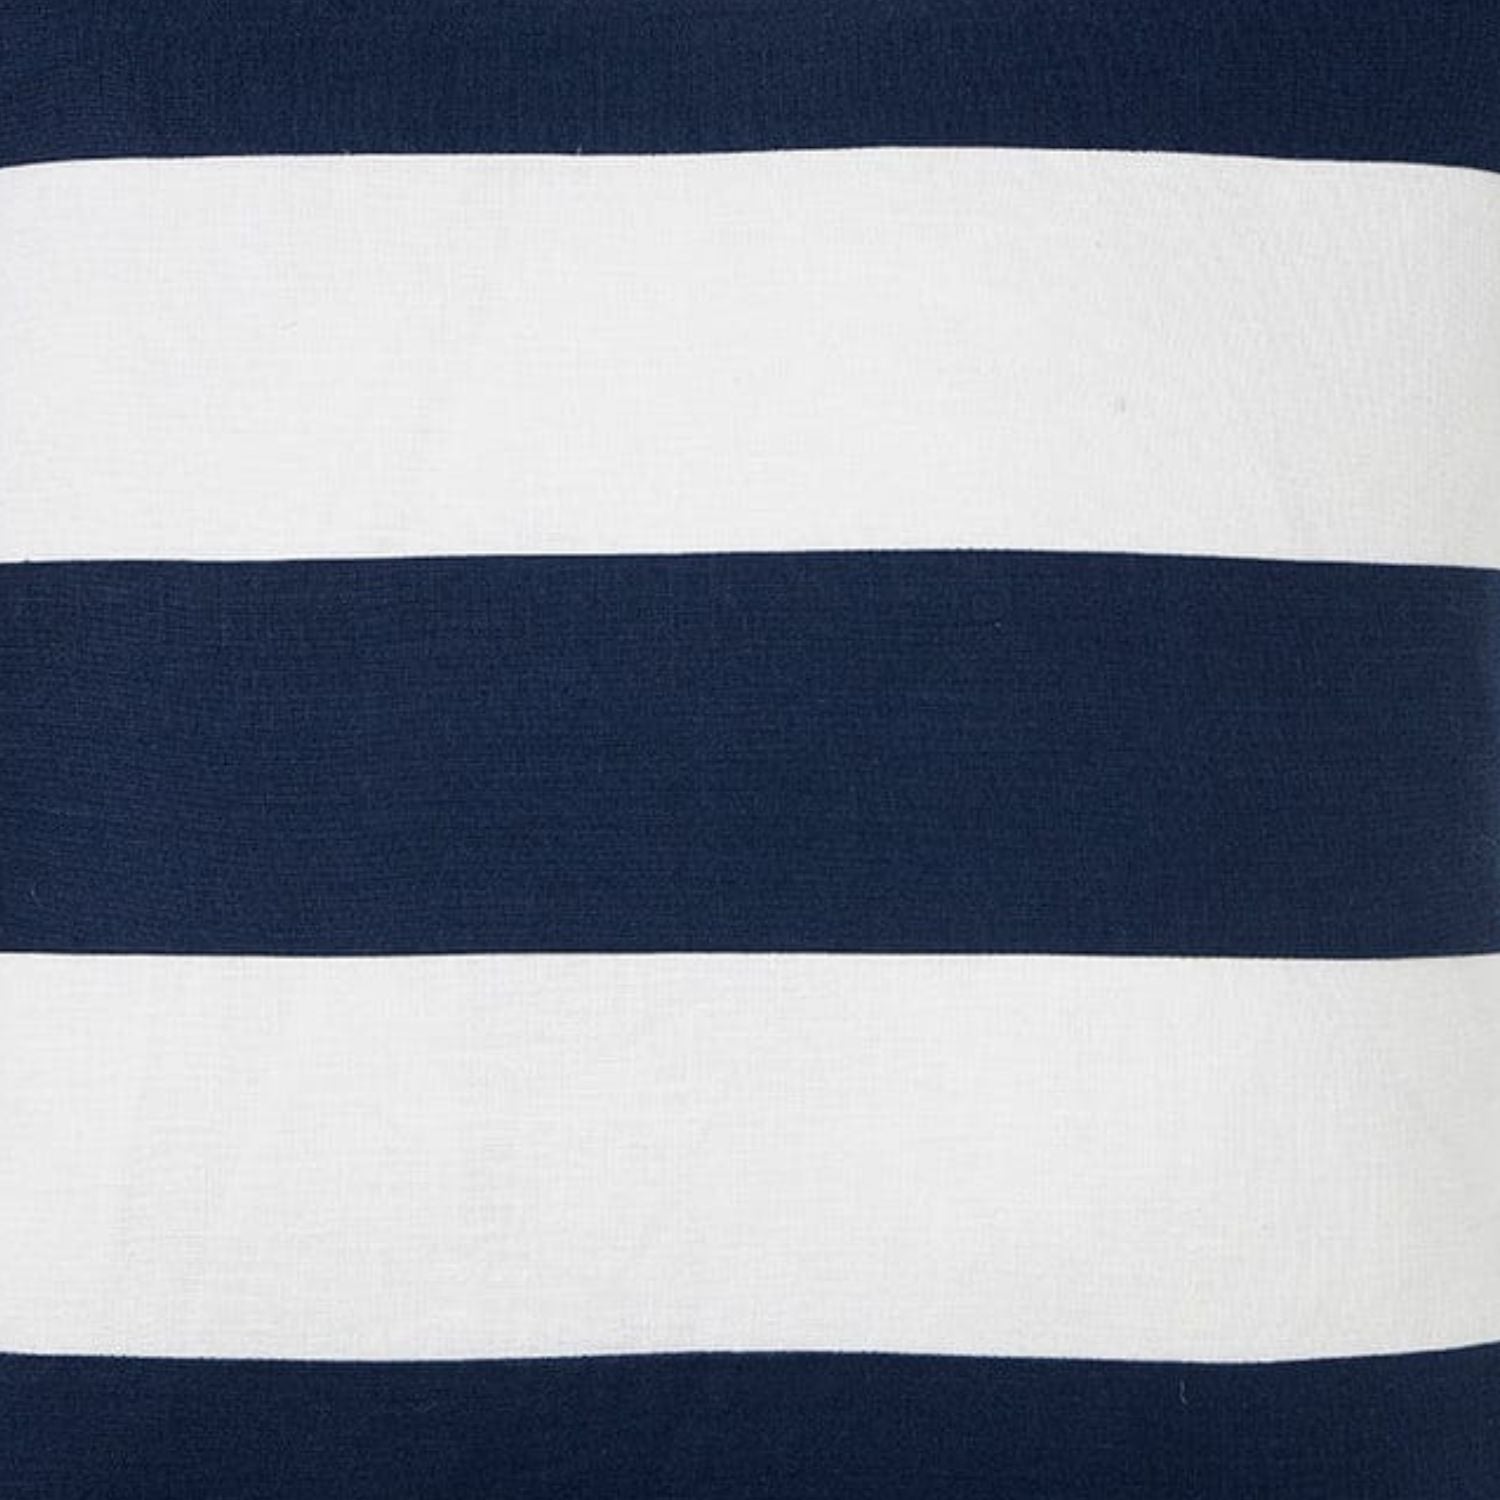 Navy & White Striped Linen Cushion